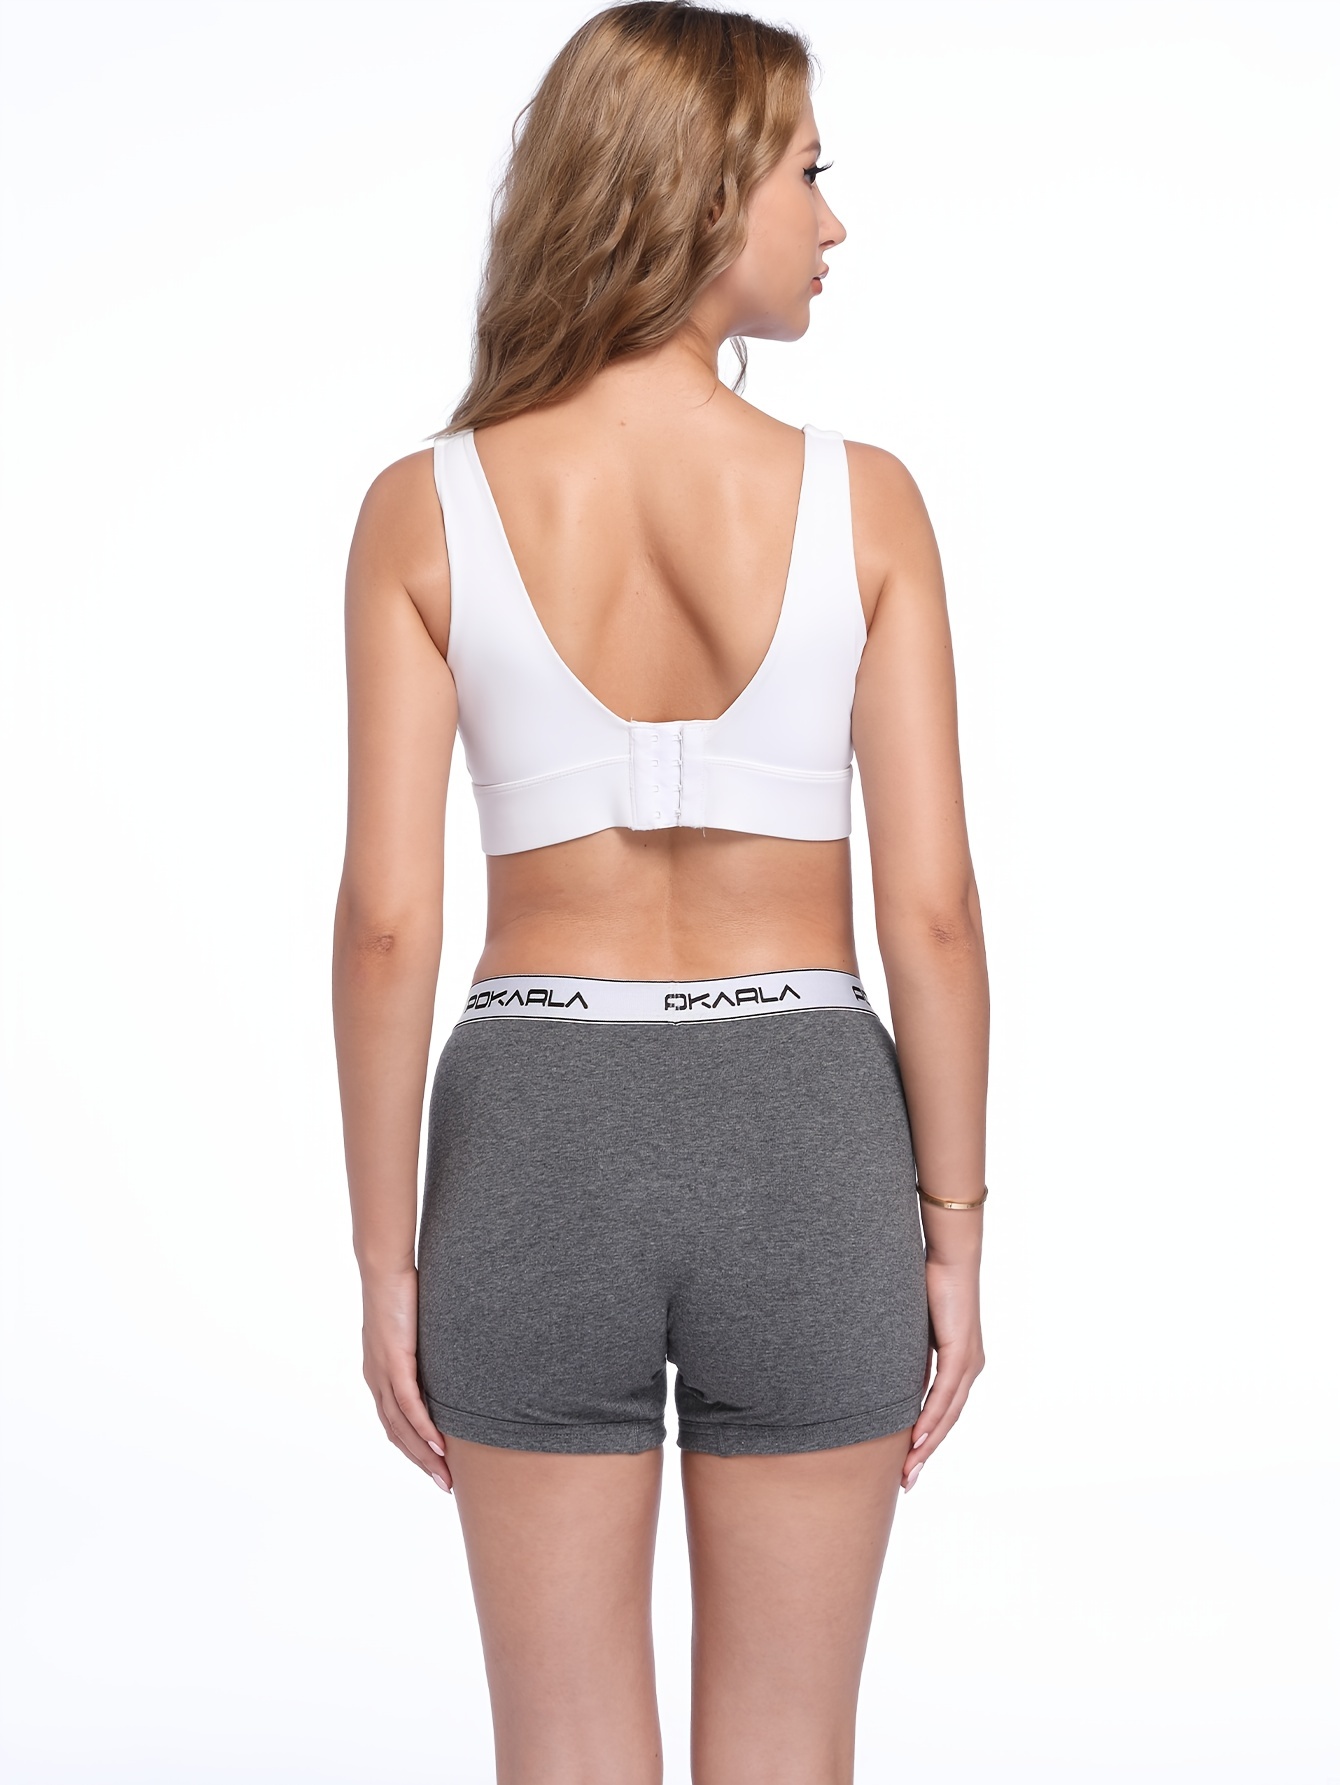 4pcs/set Sports-style Modal Underwear For Women, Neutral Style